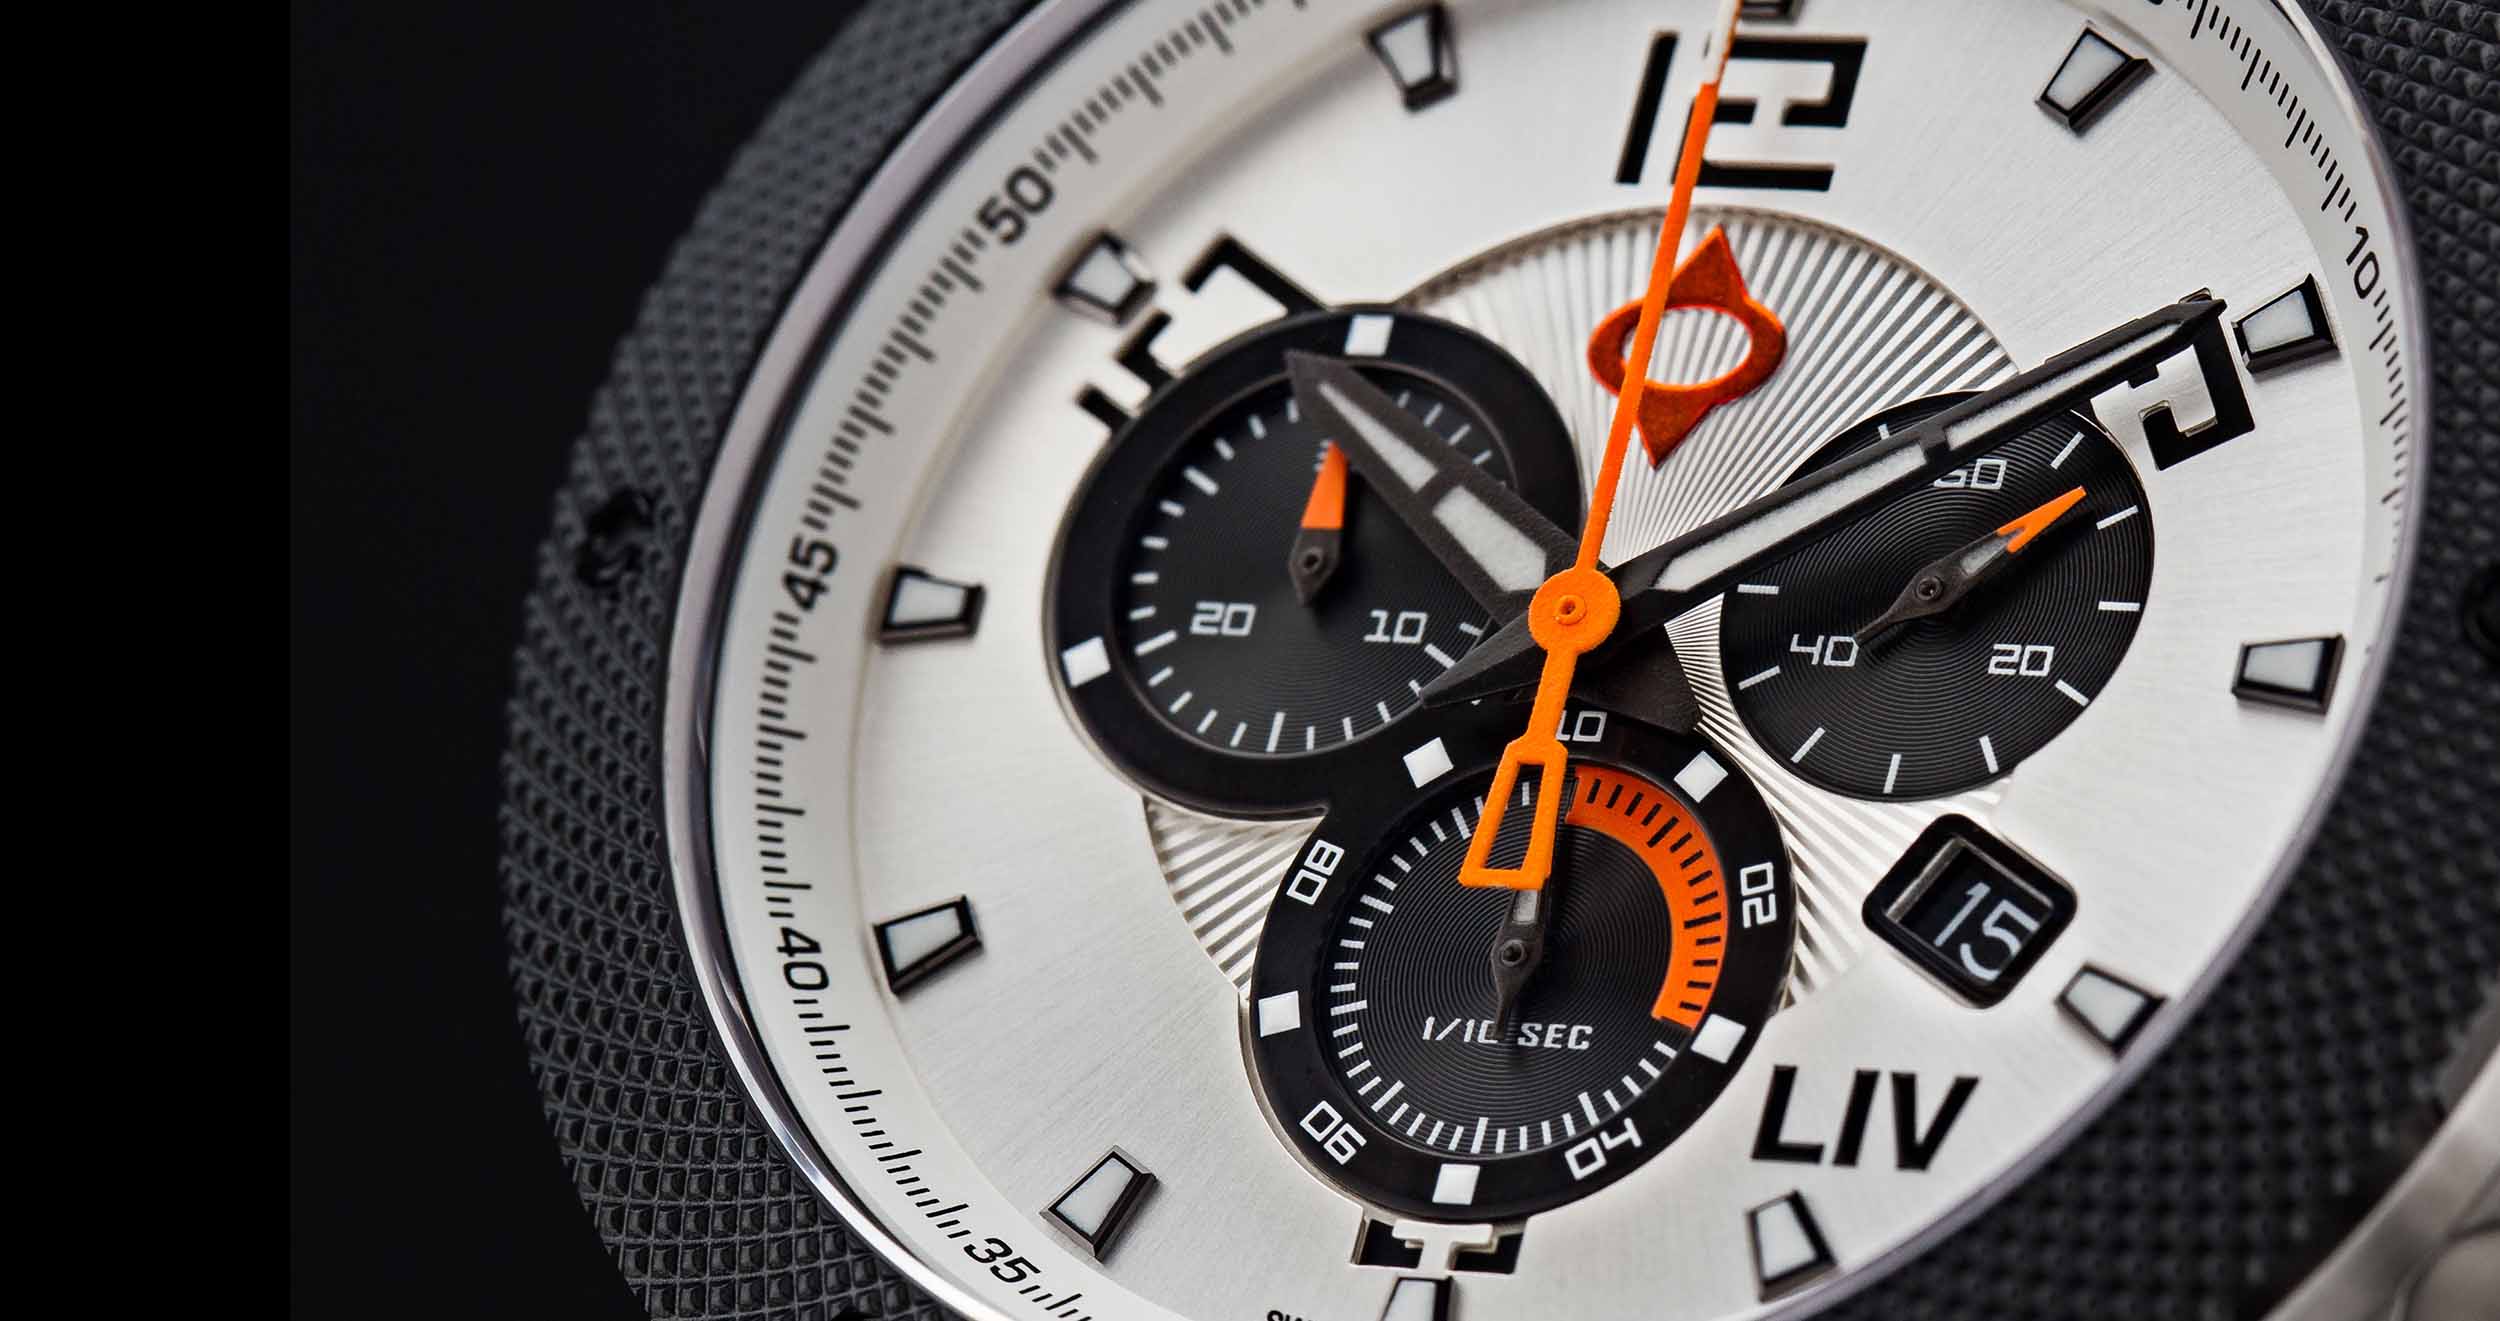 LIV Cool Gray GX1 Swiss Quartz Movement – LIV Swiss Watches